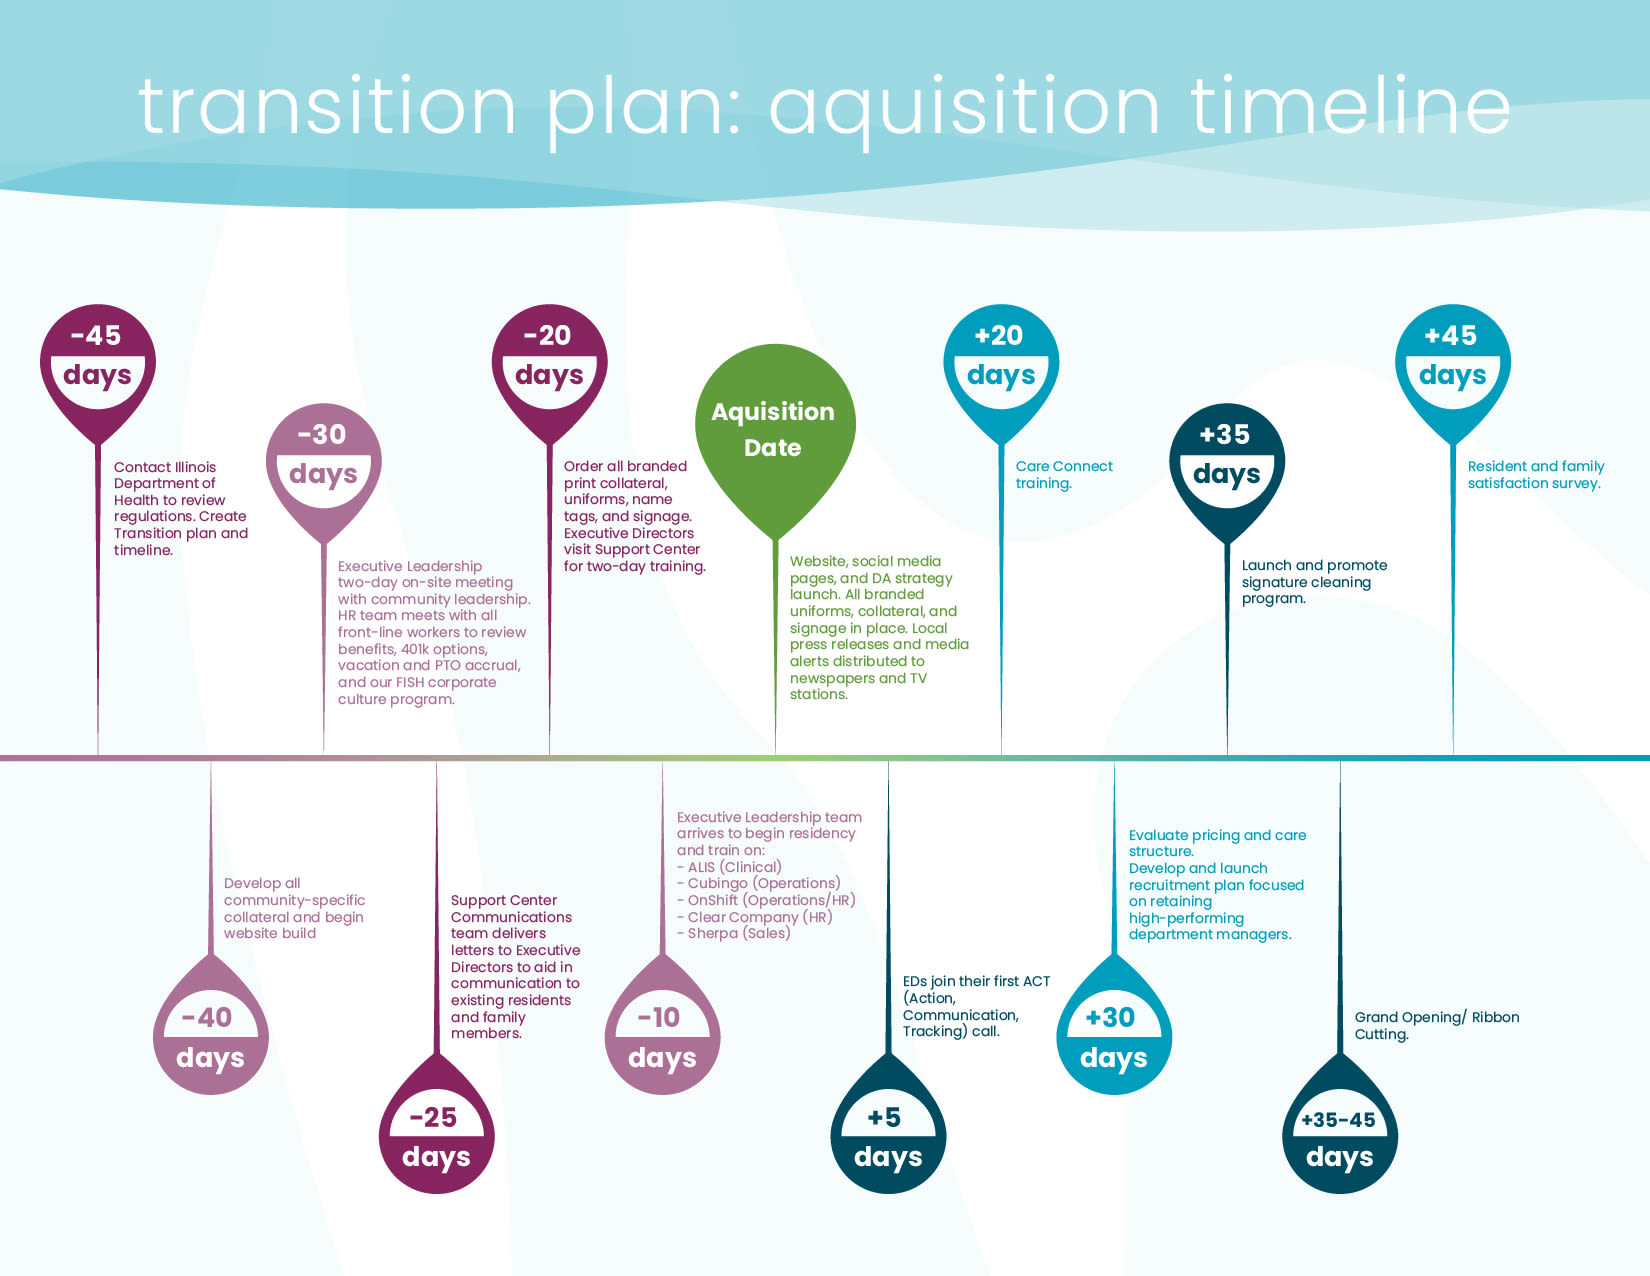 Graphic: Acquisition Timeline